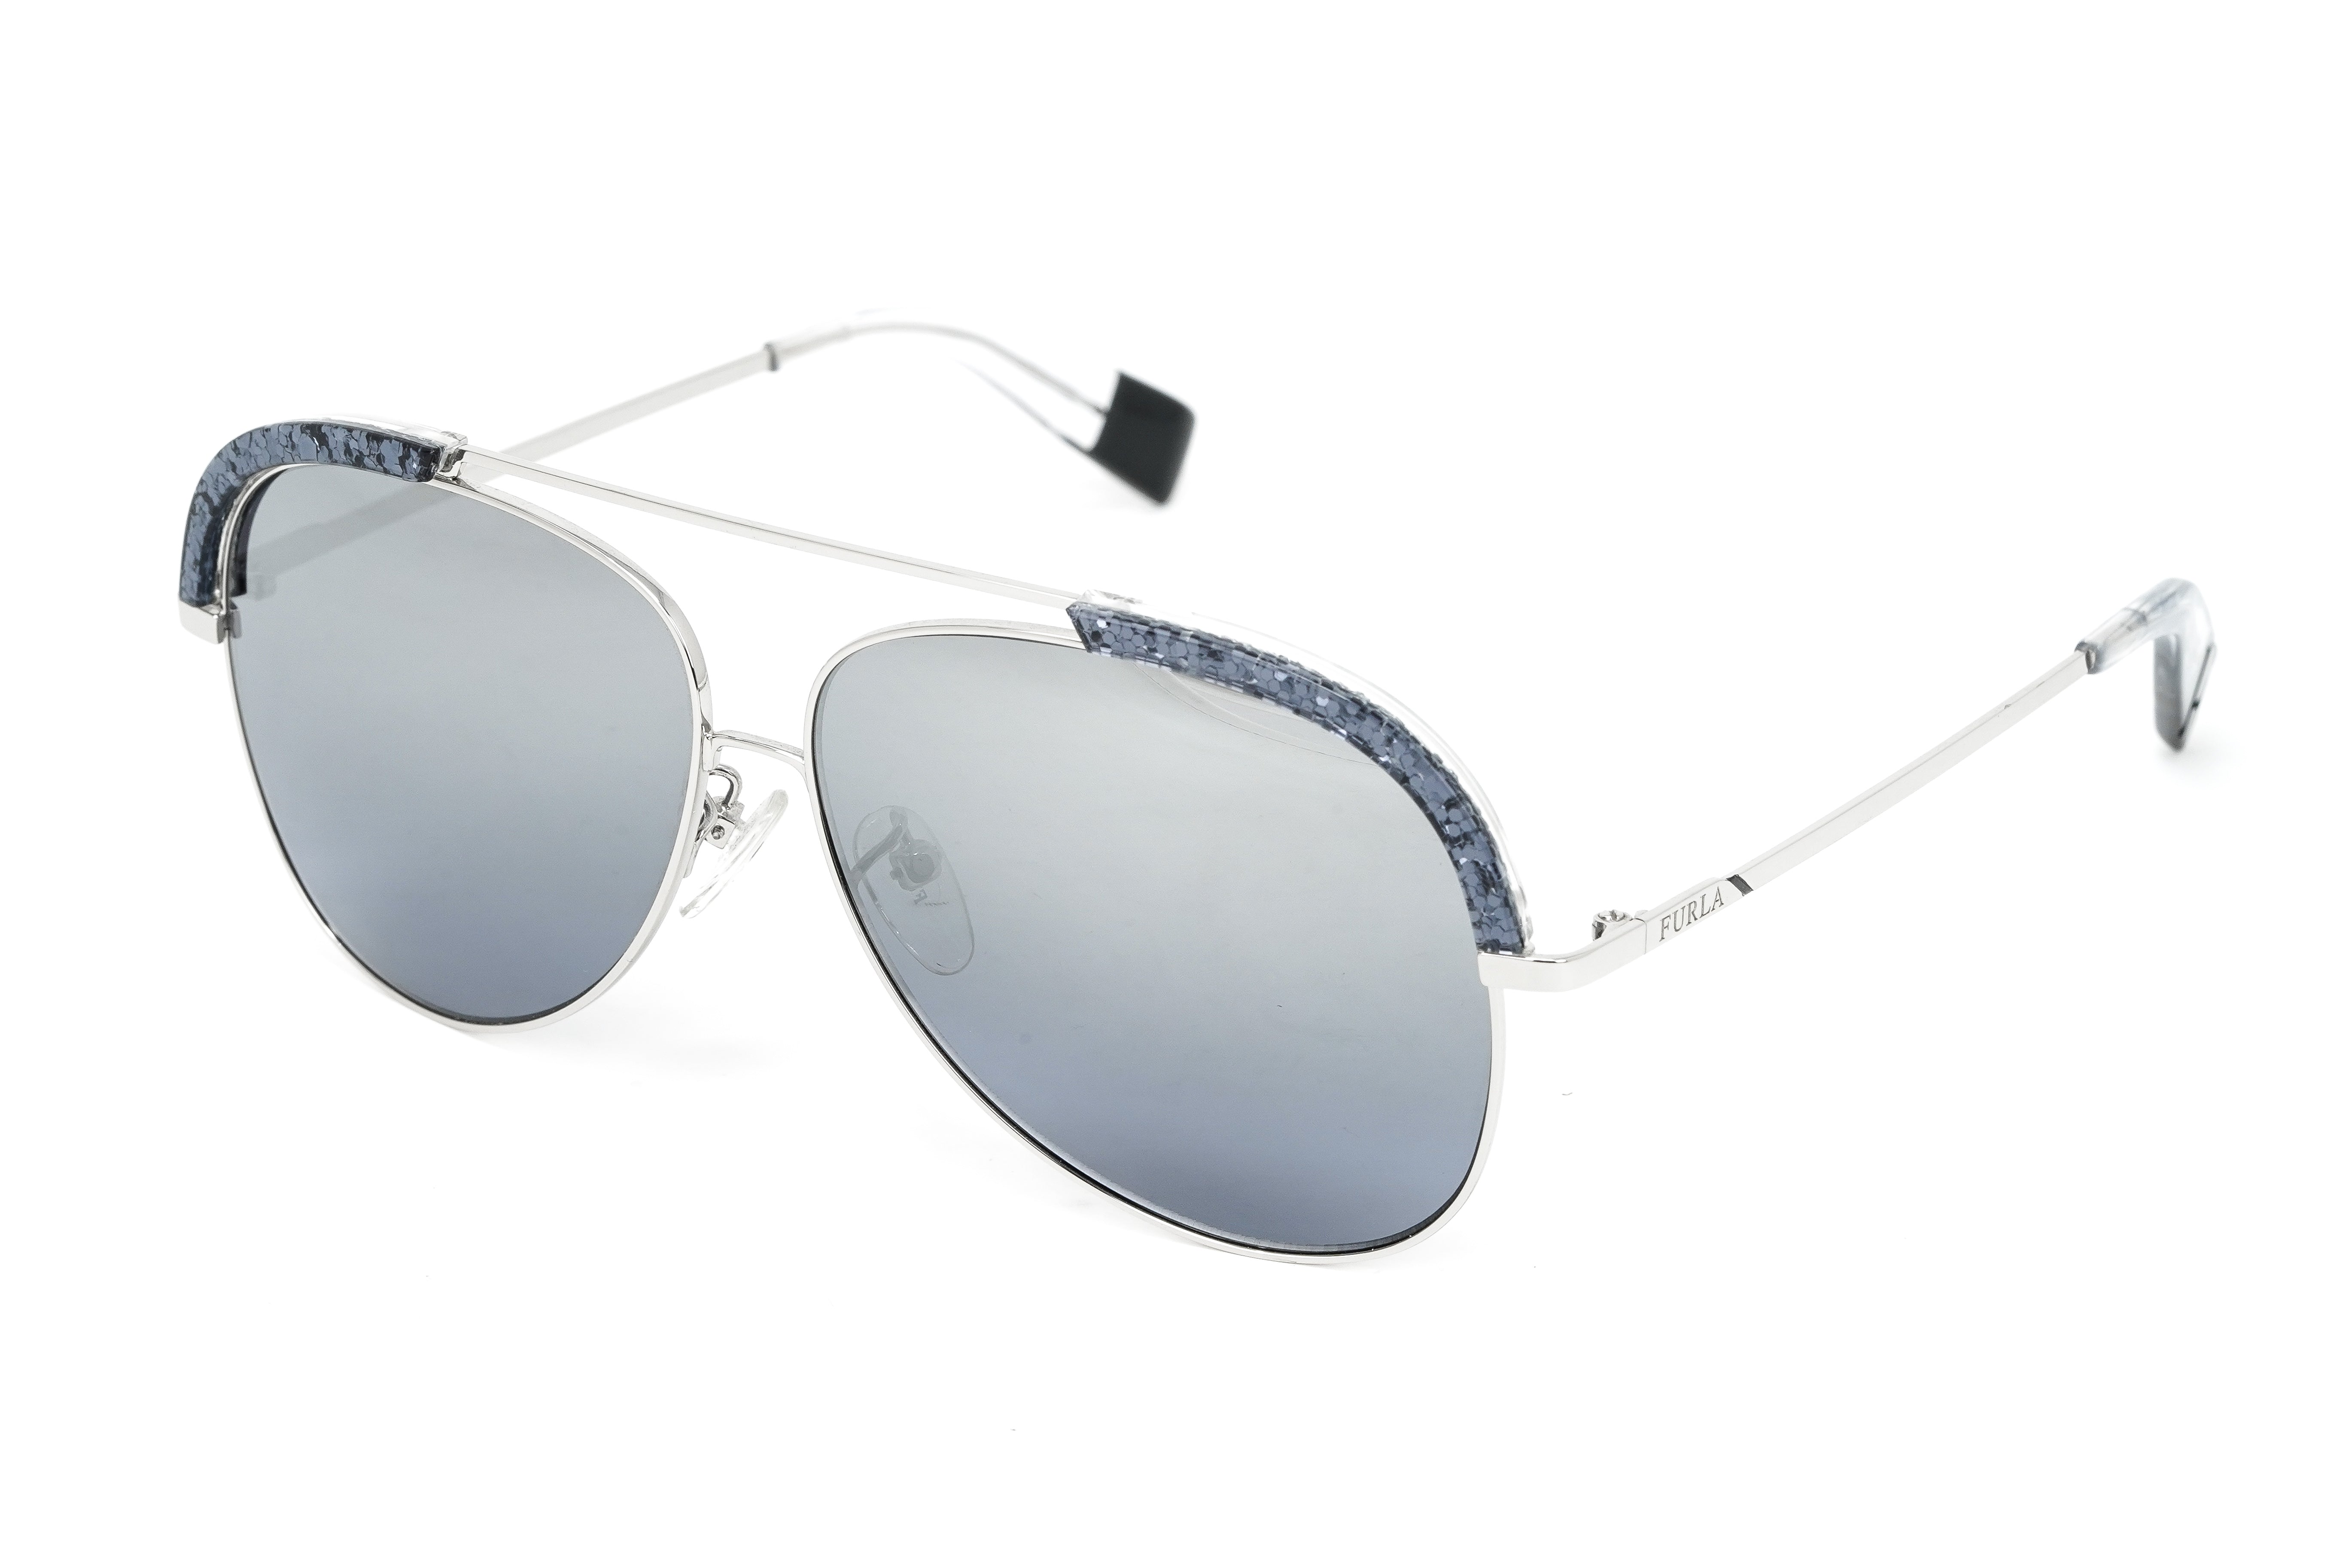 Furla Women's Sunglasses Pilot Silver/Blue SFU284 579X